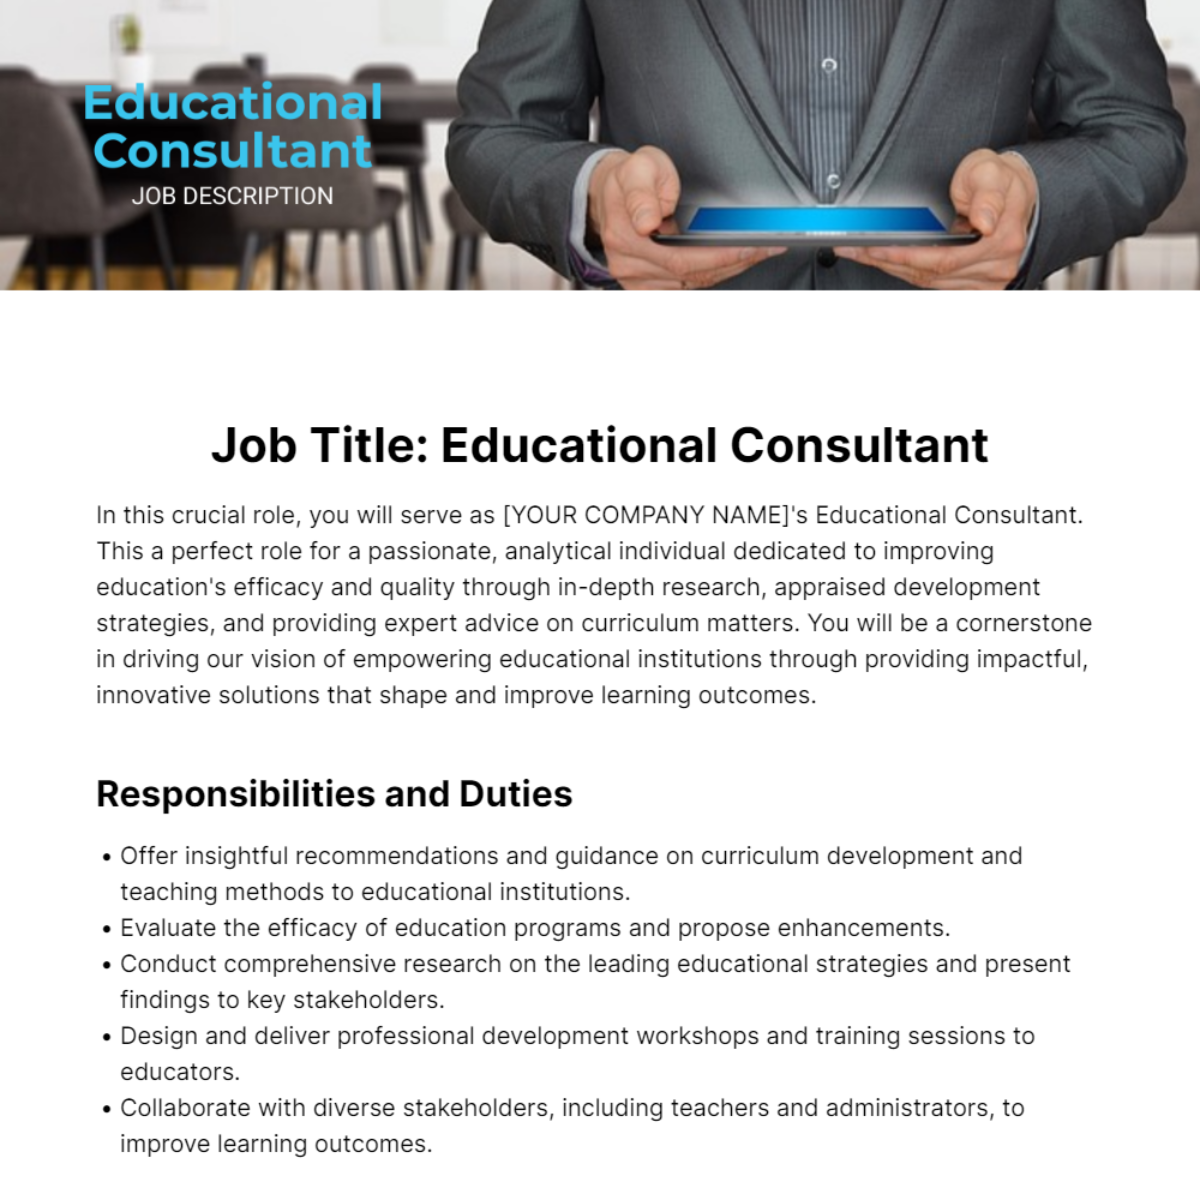 Educational Consultant Job Description Template